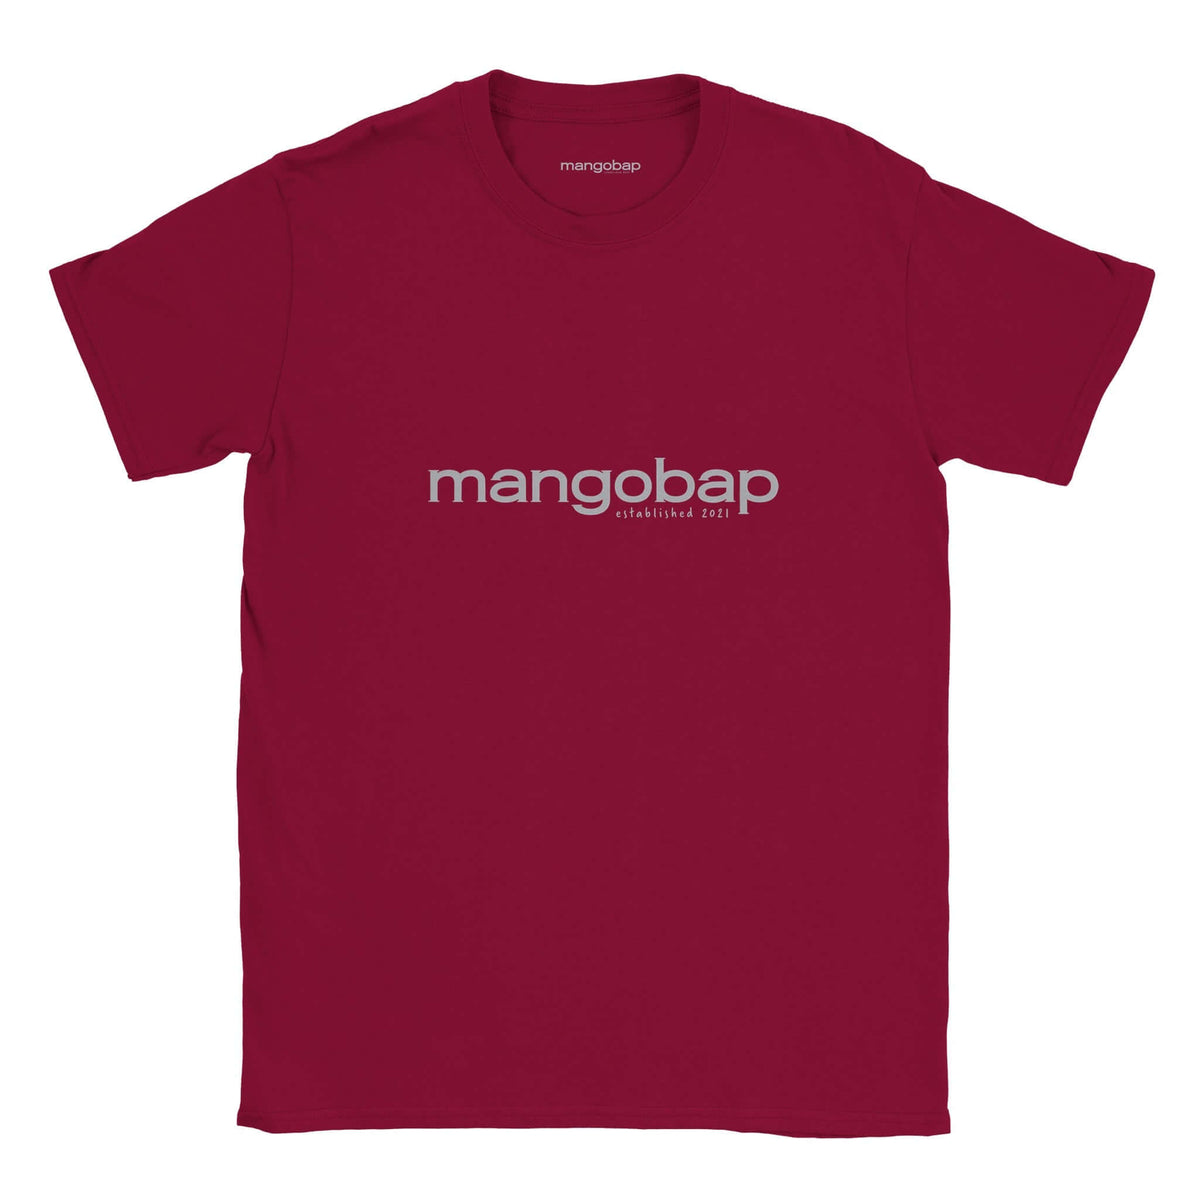 Mens MangoBap cardinal red t shirt - MangoBap